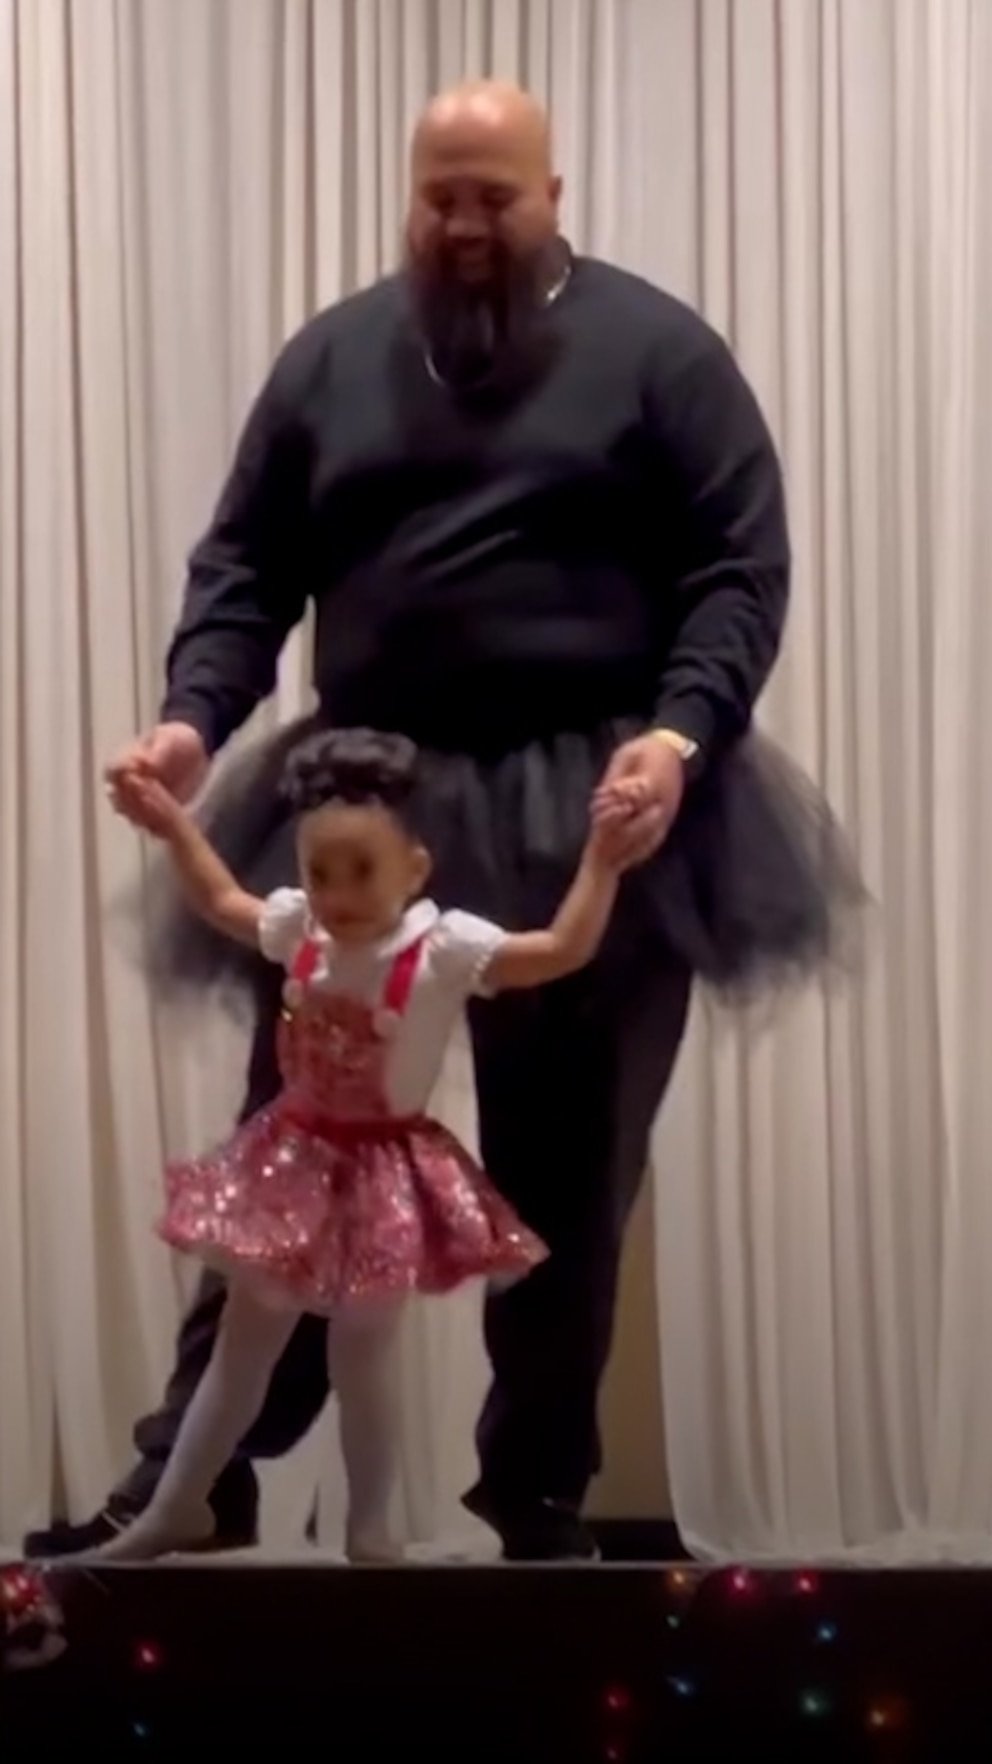 WATCH: 6-foot-5-inch dad wears ballet skirt to dance with daughter for her ballet recital